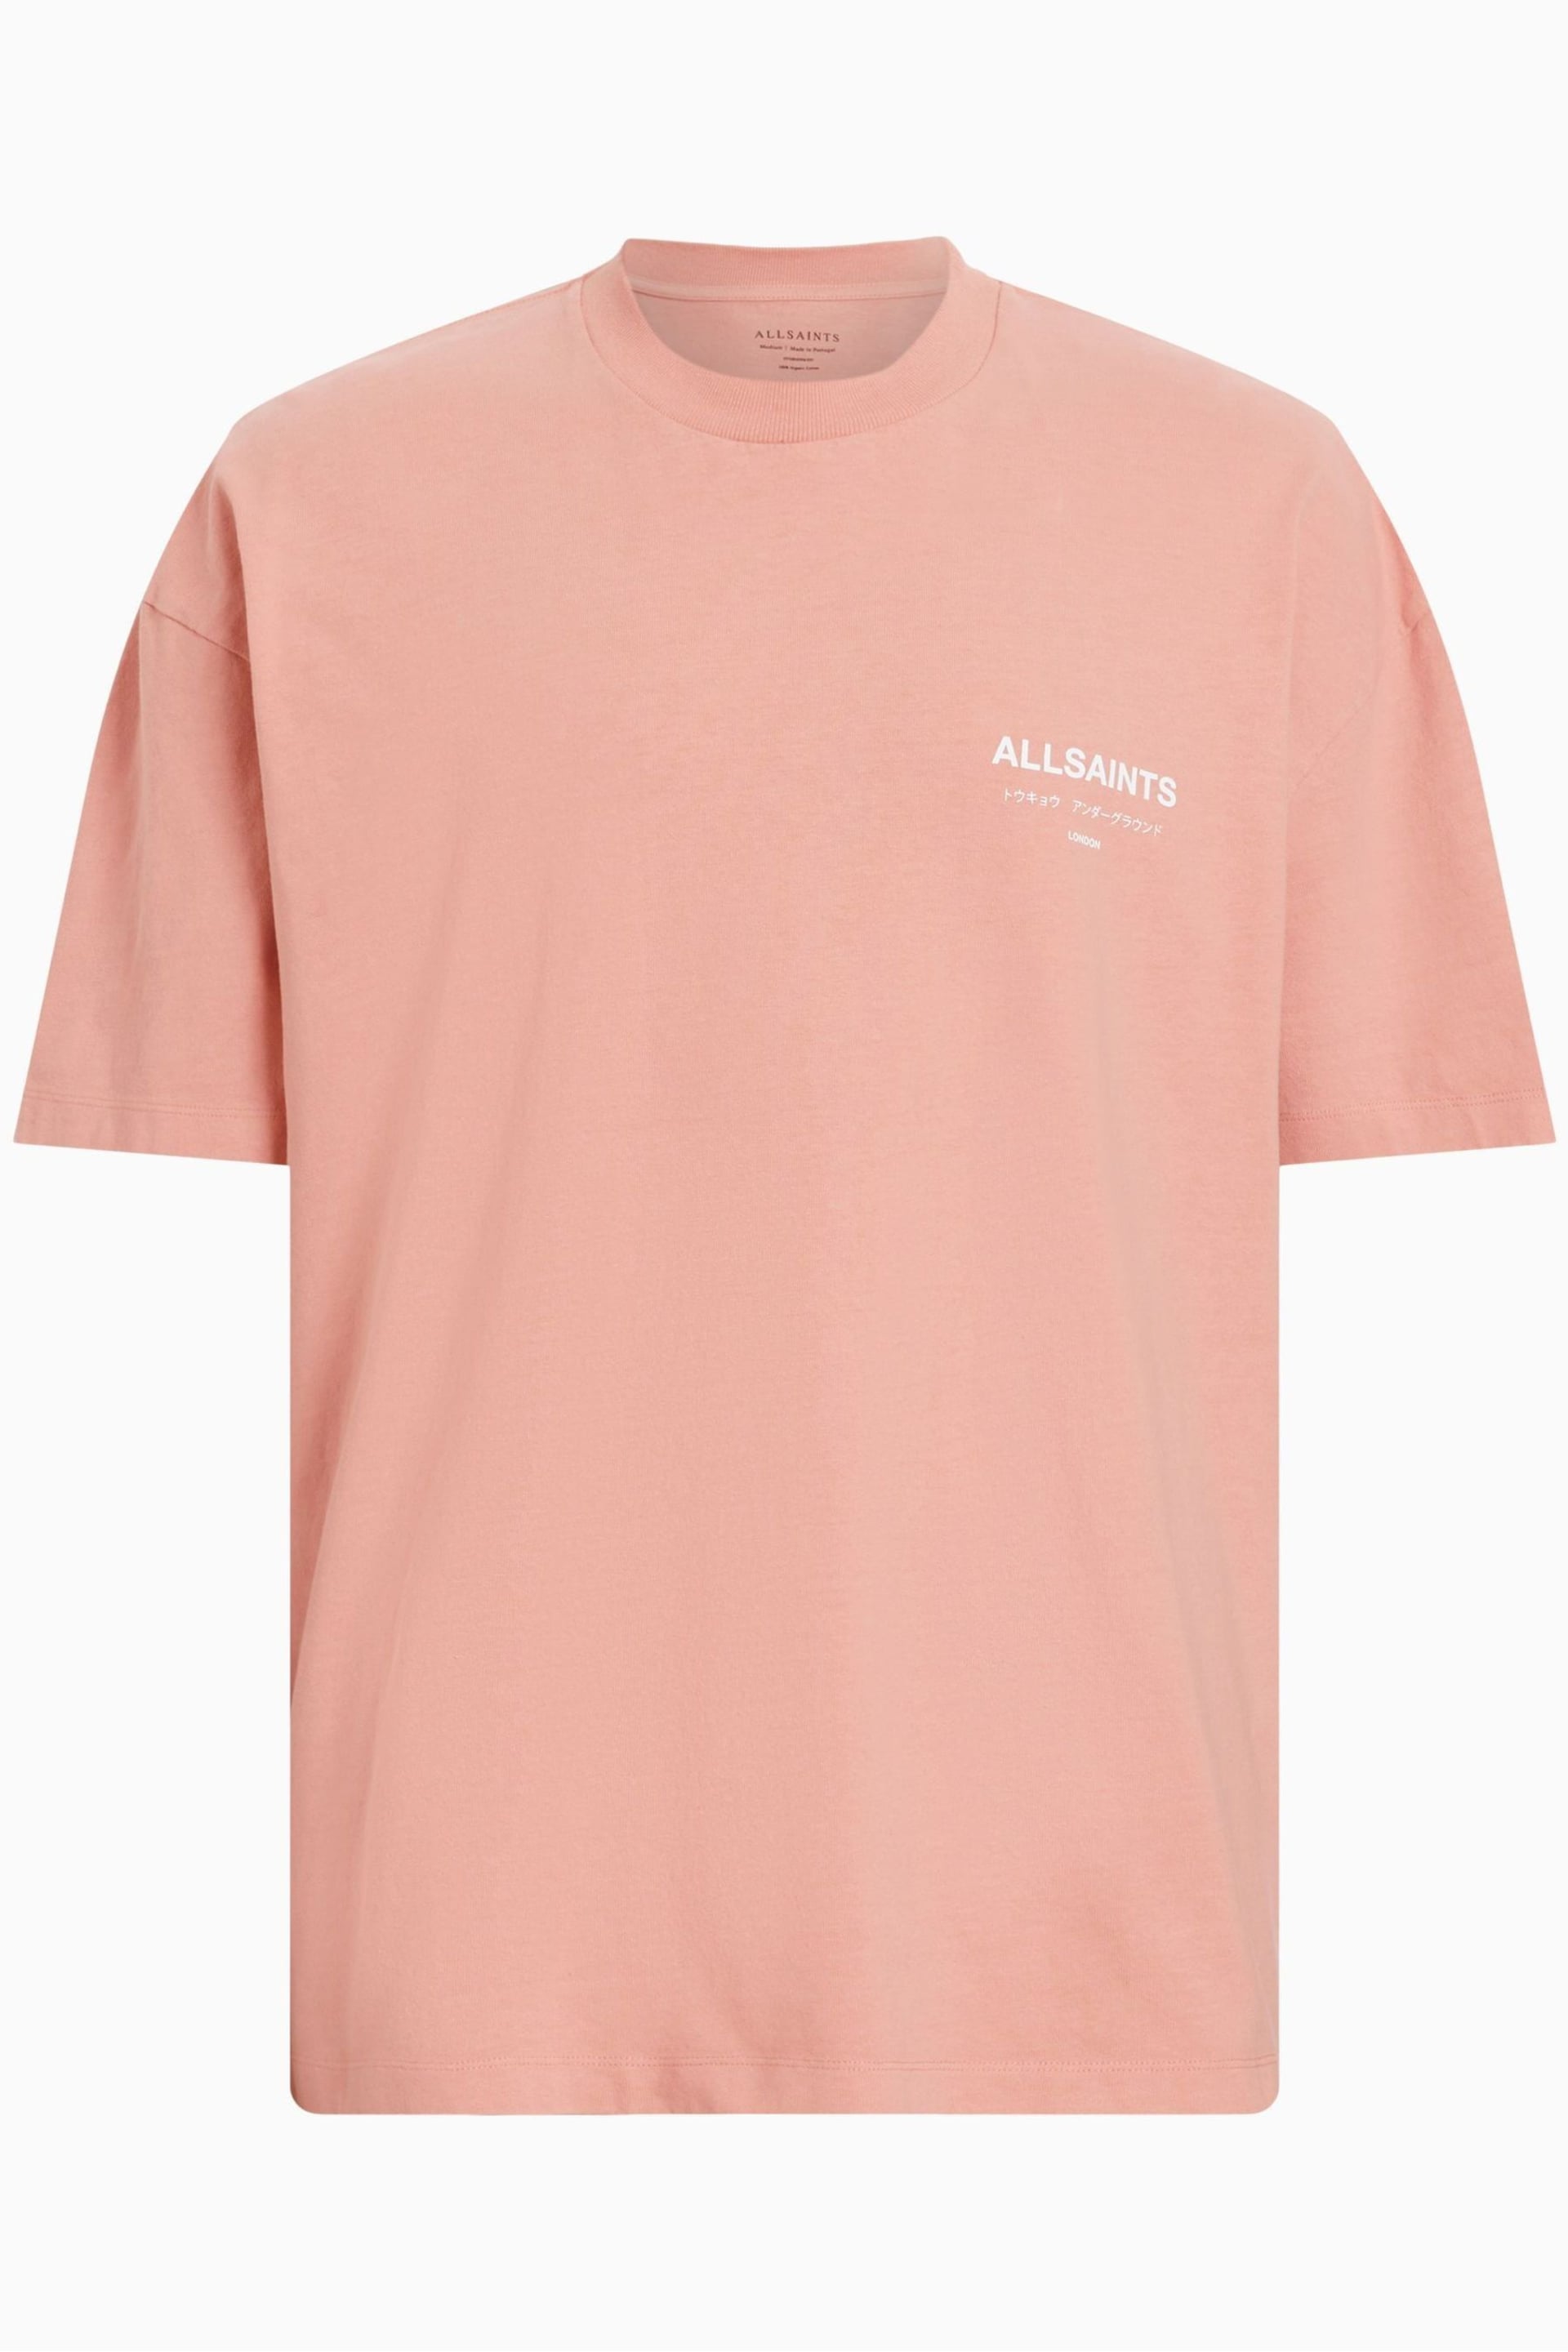 AllSaints Pink Underground Crew T-Shirt - Image 6 of 6